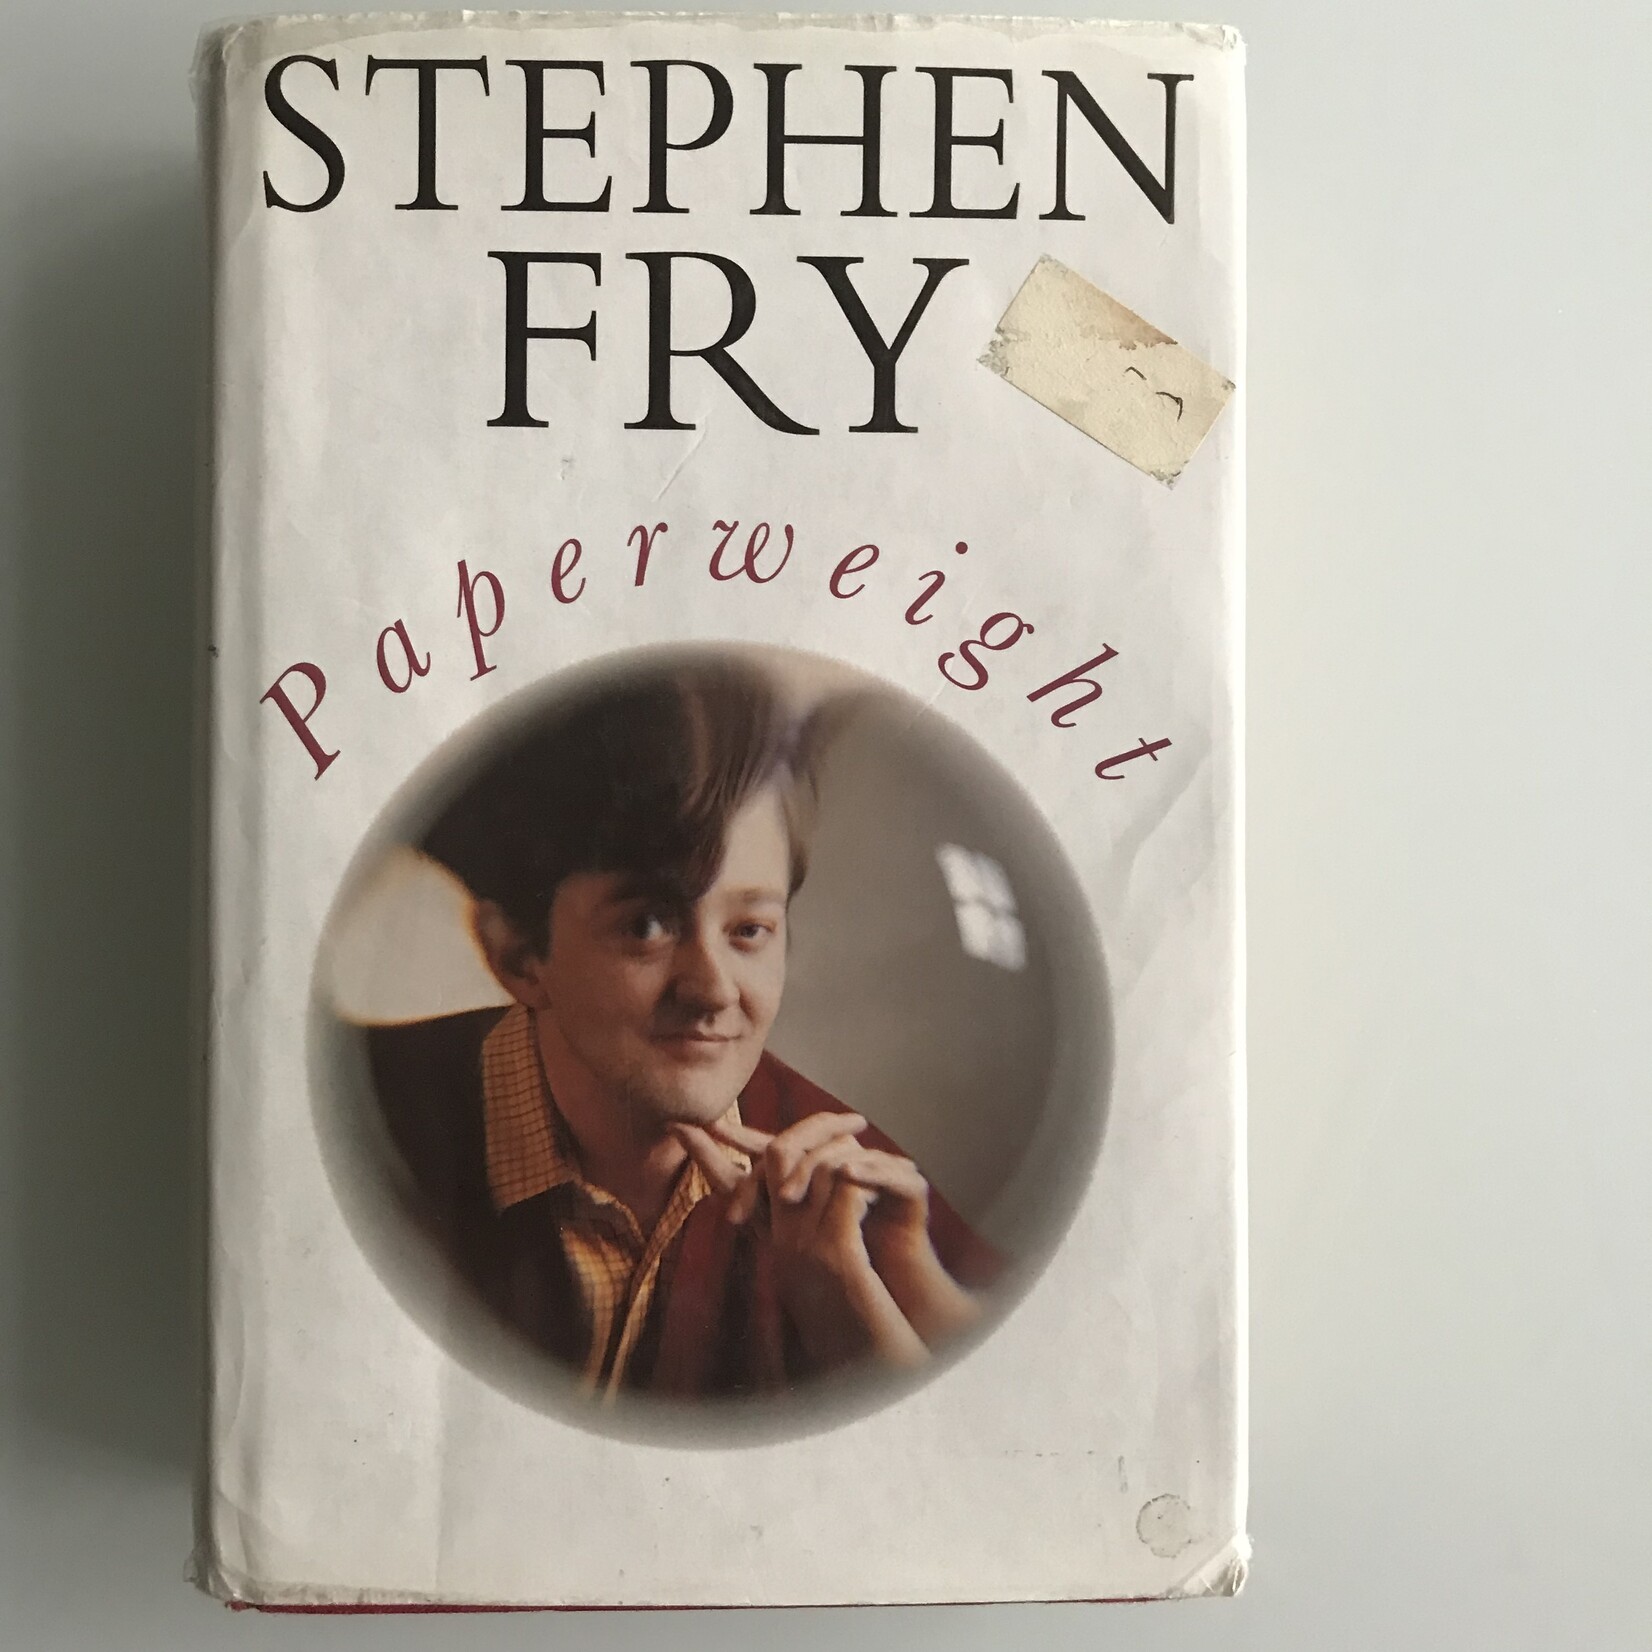 Stephen Fry - Paperweight - Hardback (USED)